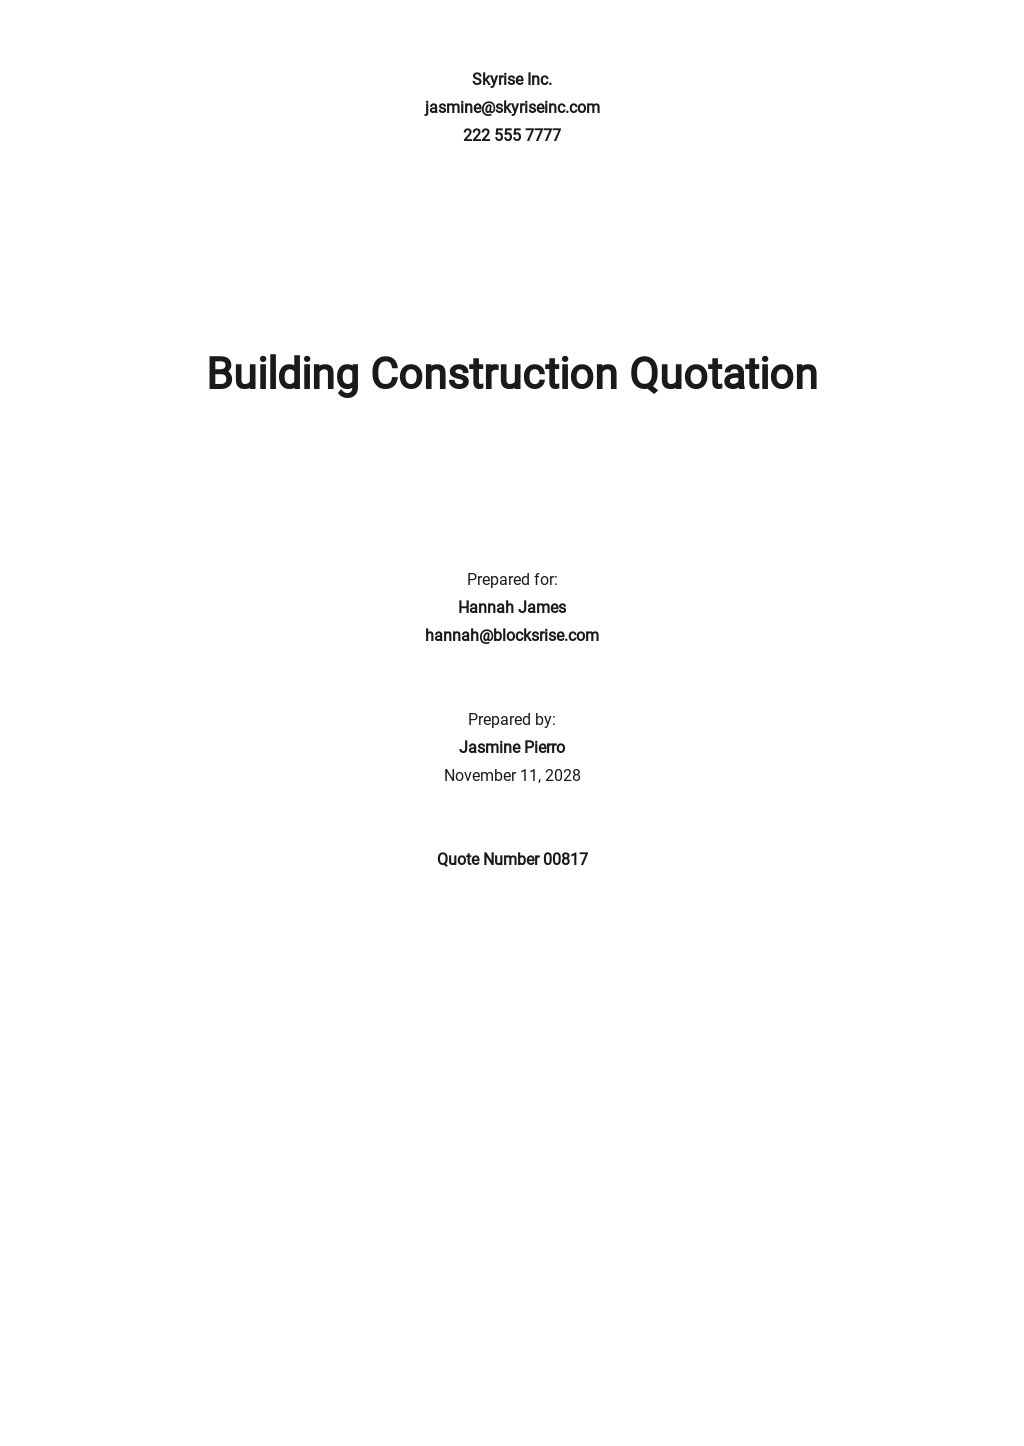 Building Construction Quotation Template.jpe